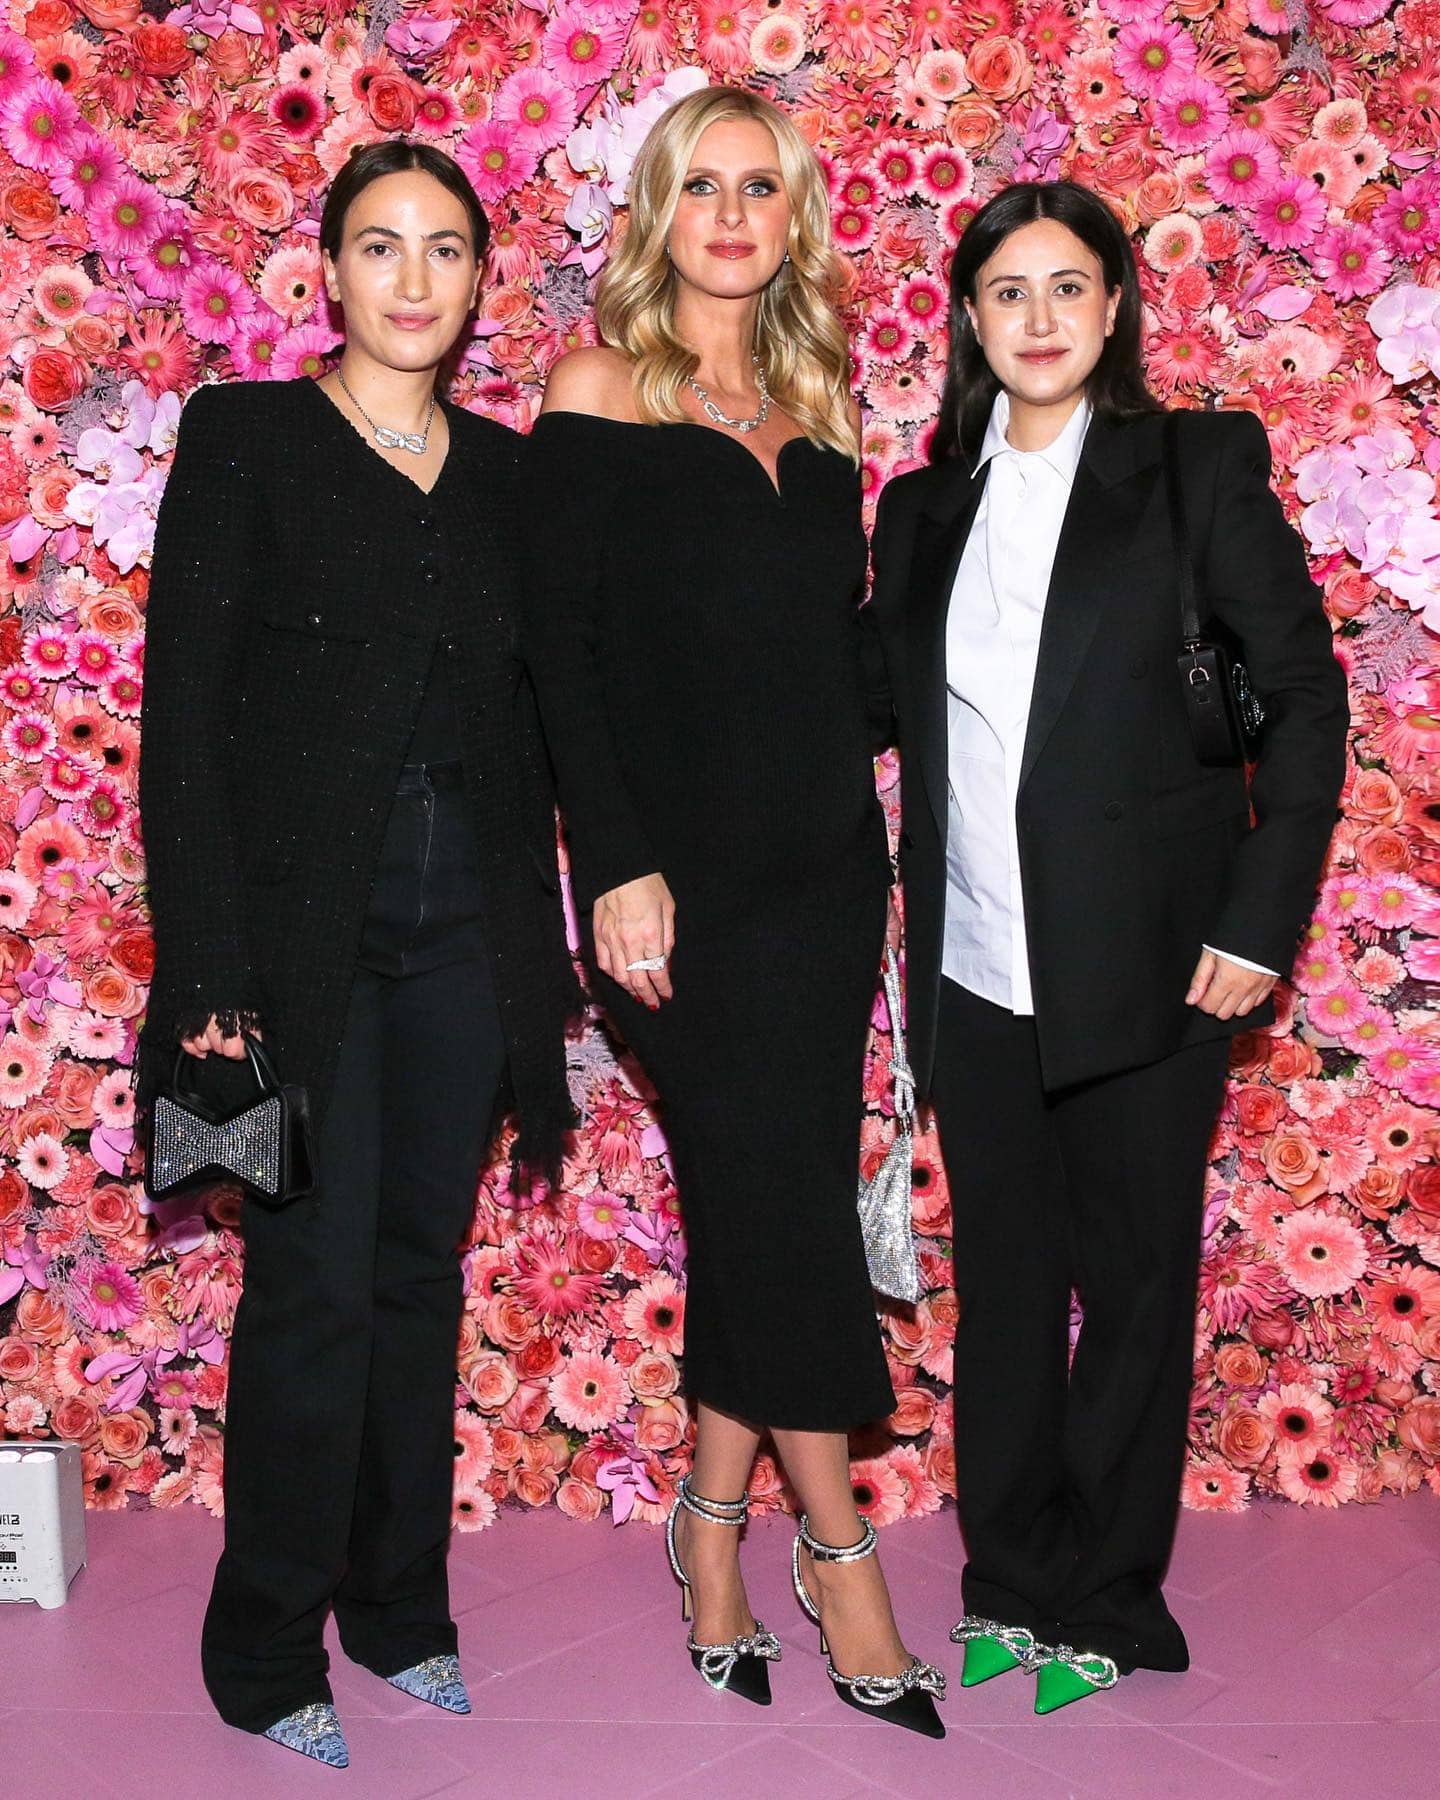 Sisters Nina and Gvantsa Macharashvili, pictured with Nicky Hilton, founded the Georgia footwear brand Mach & Mach in 2012